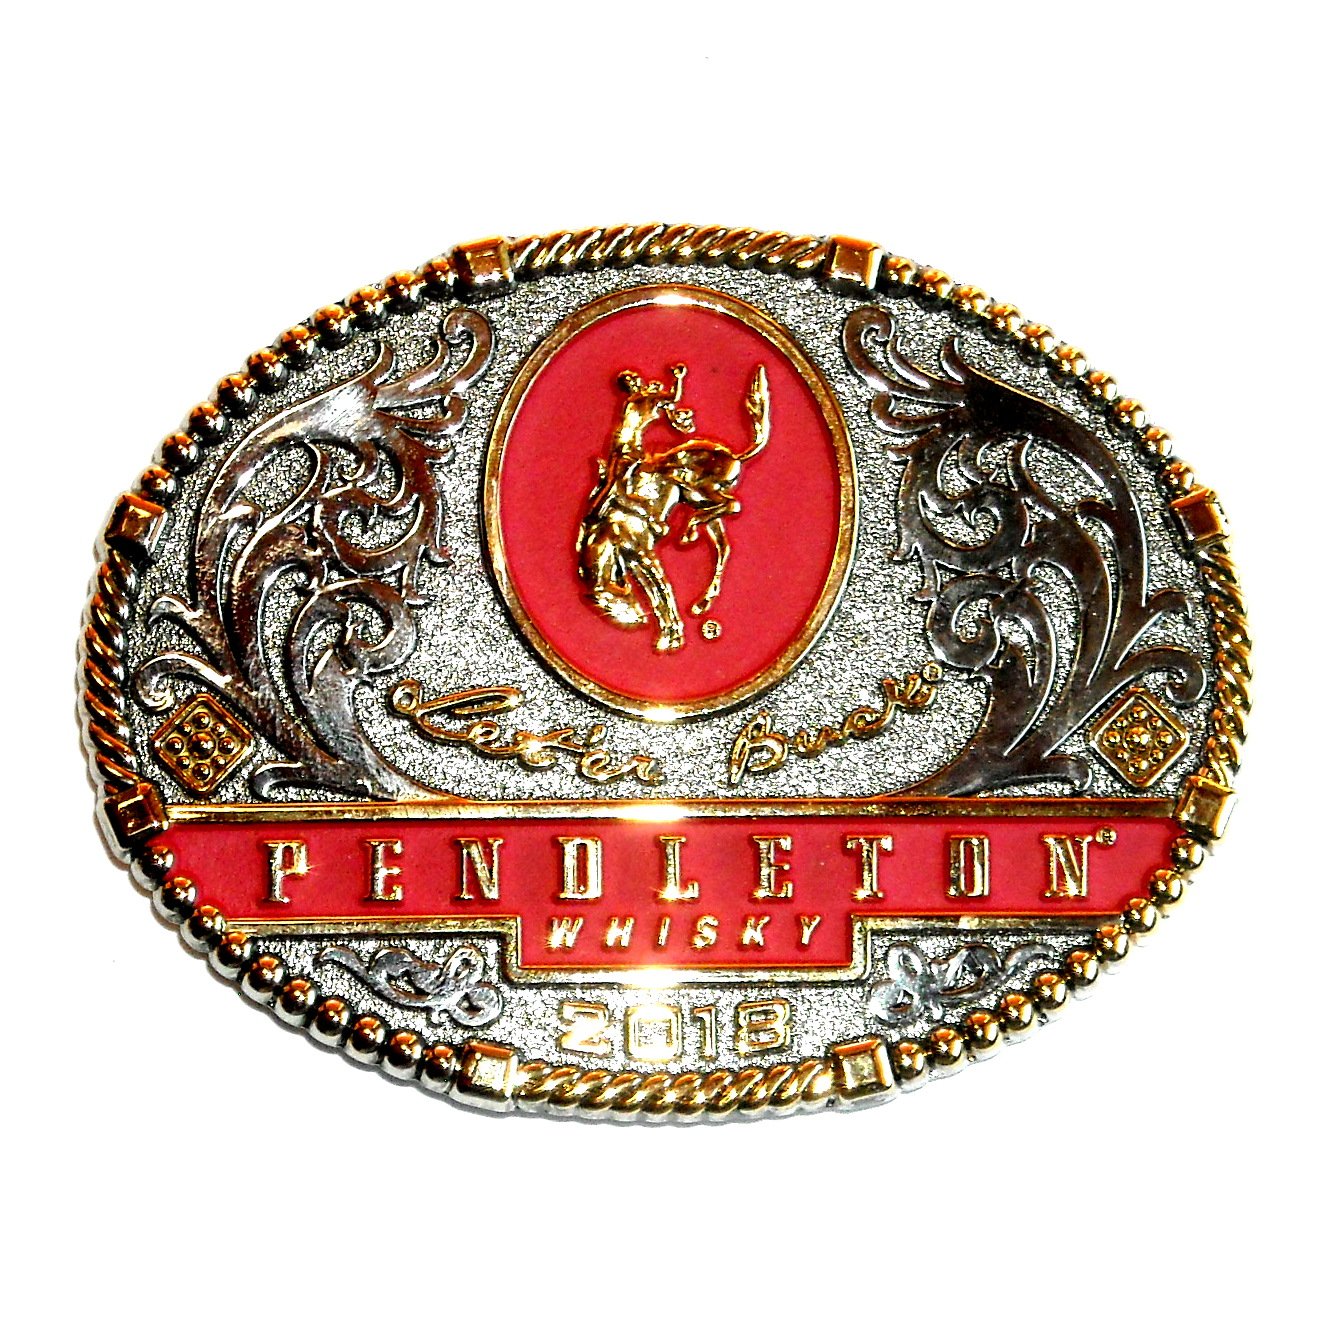 Pendleton Whisky Rodeo Cowboy Montana Silversmiths Ornate Scroll Belt Buckle 